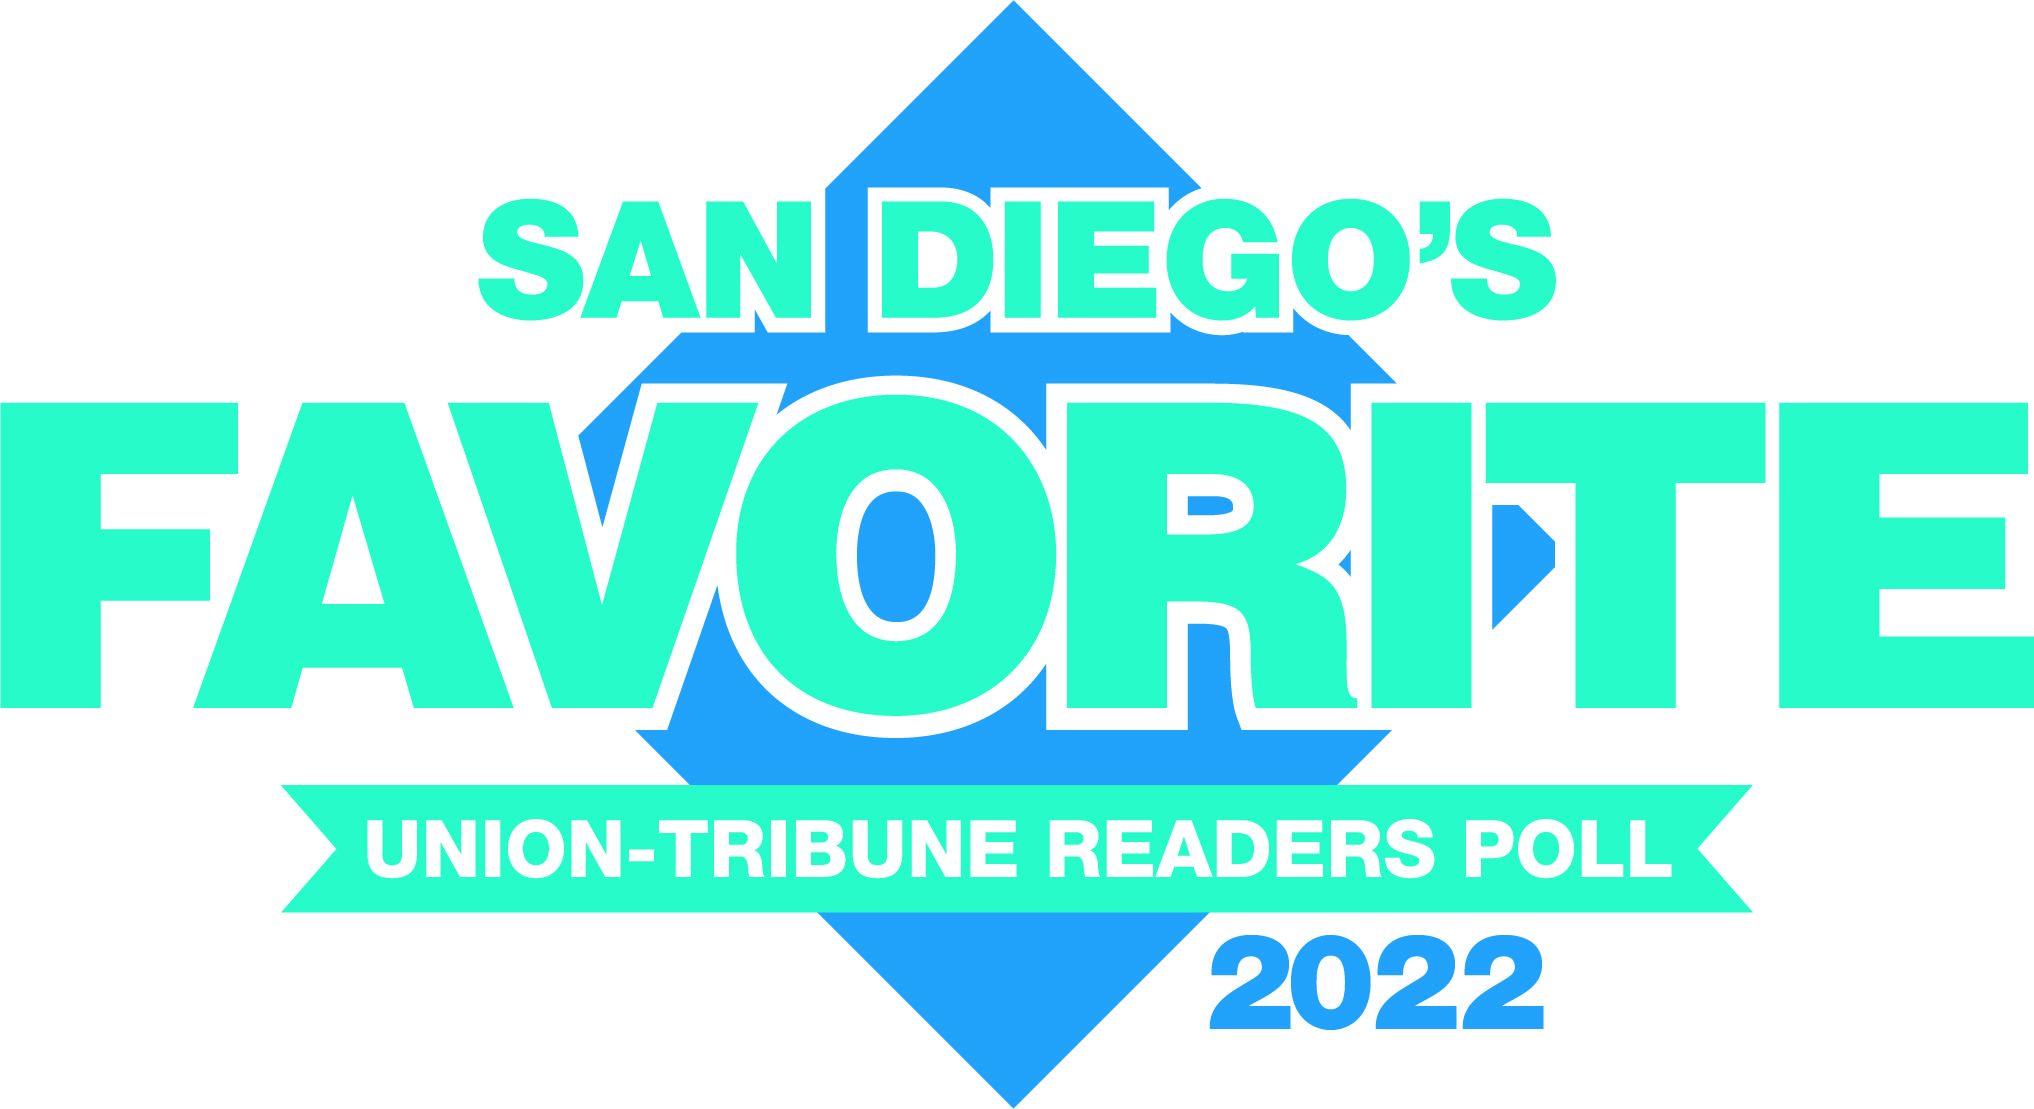 San Diego's Favorite Union Tribune